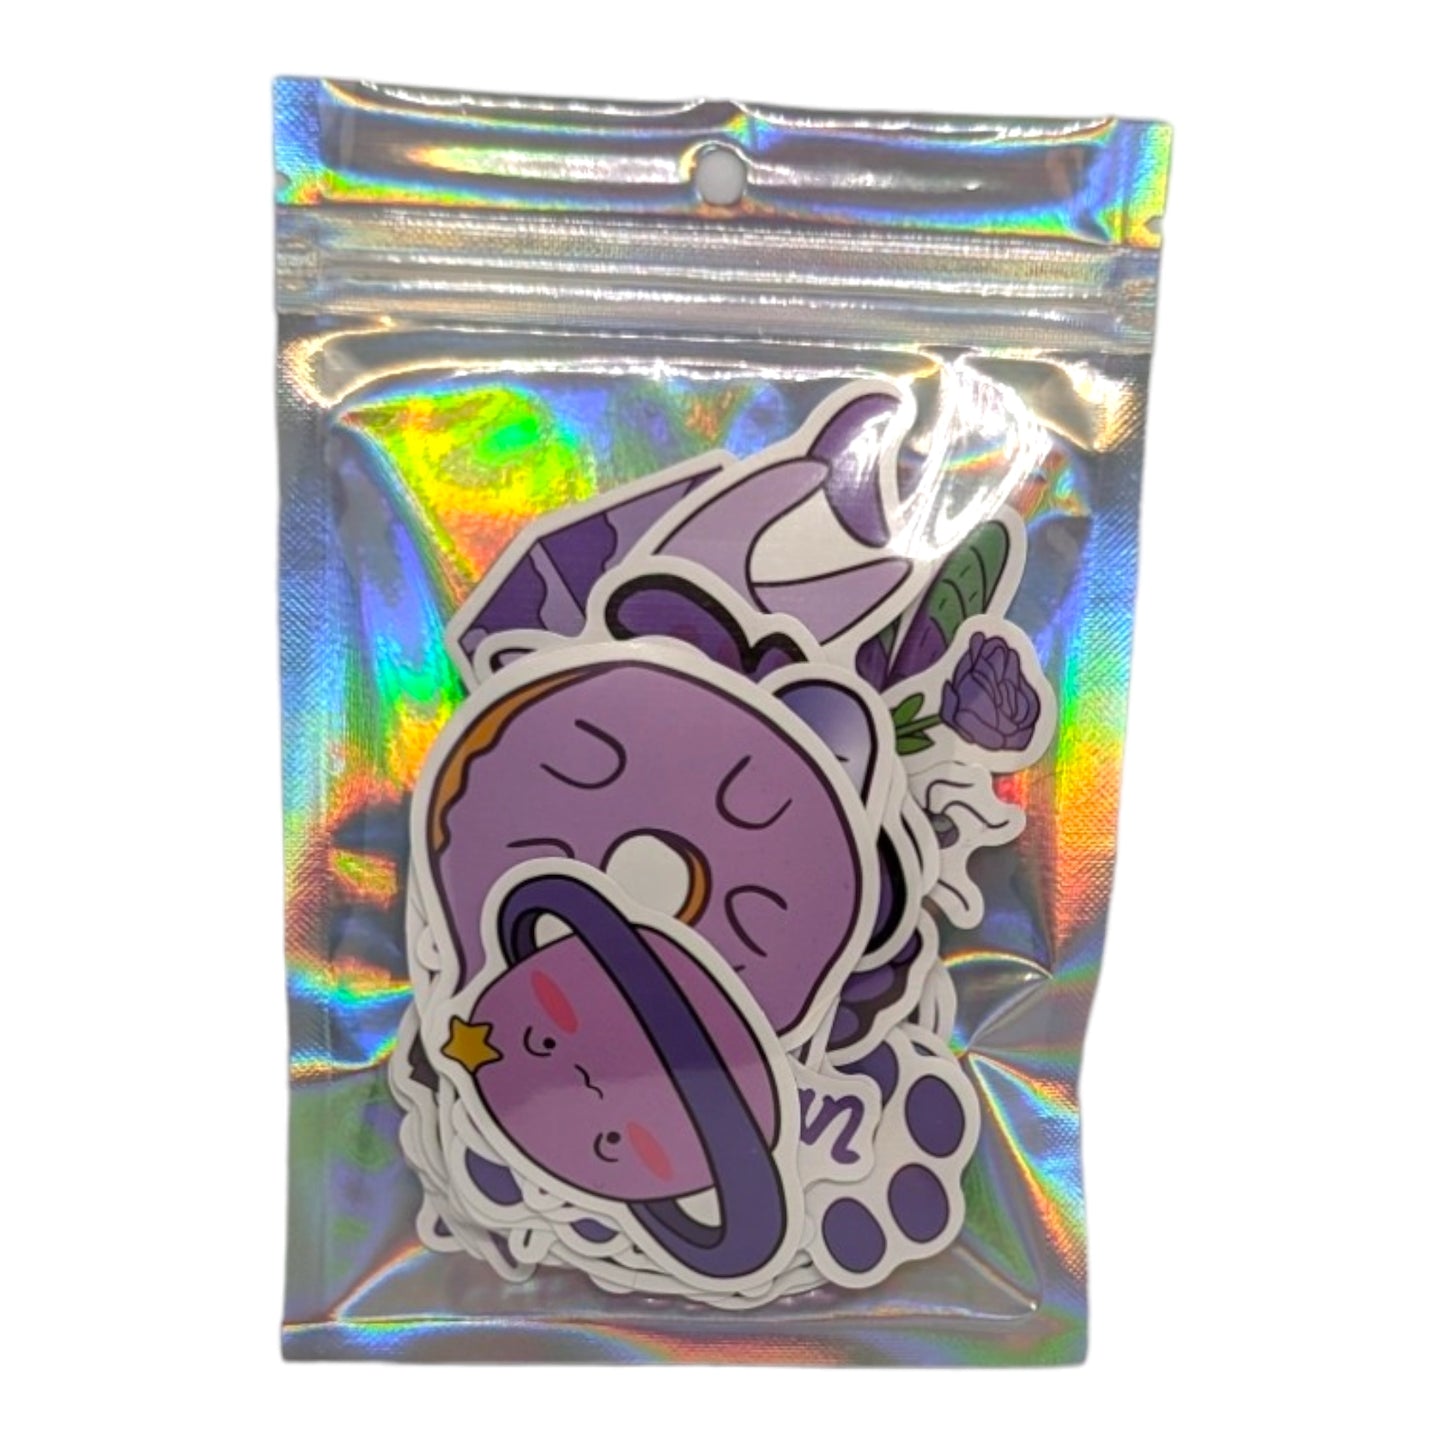 Sticker Pack #66 - Purple 💜 50 pieces